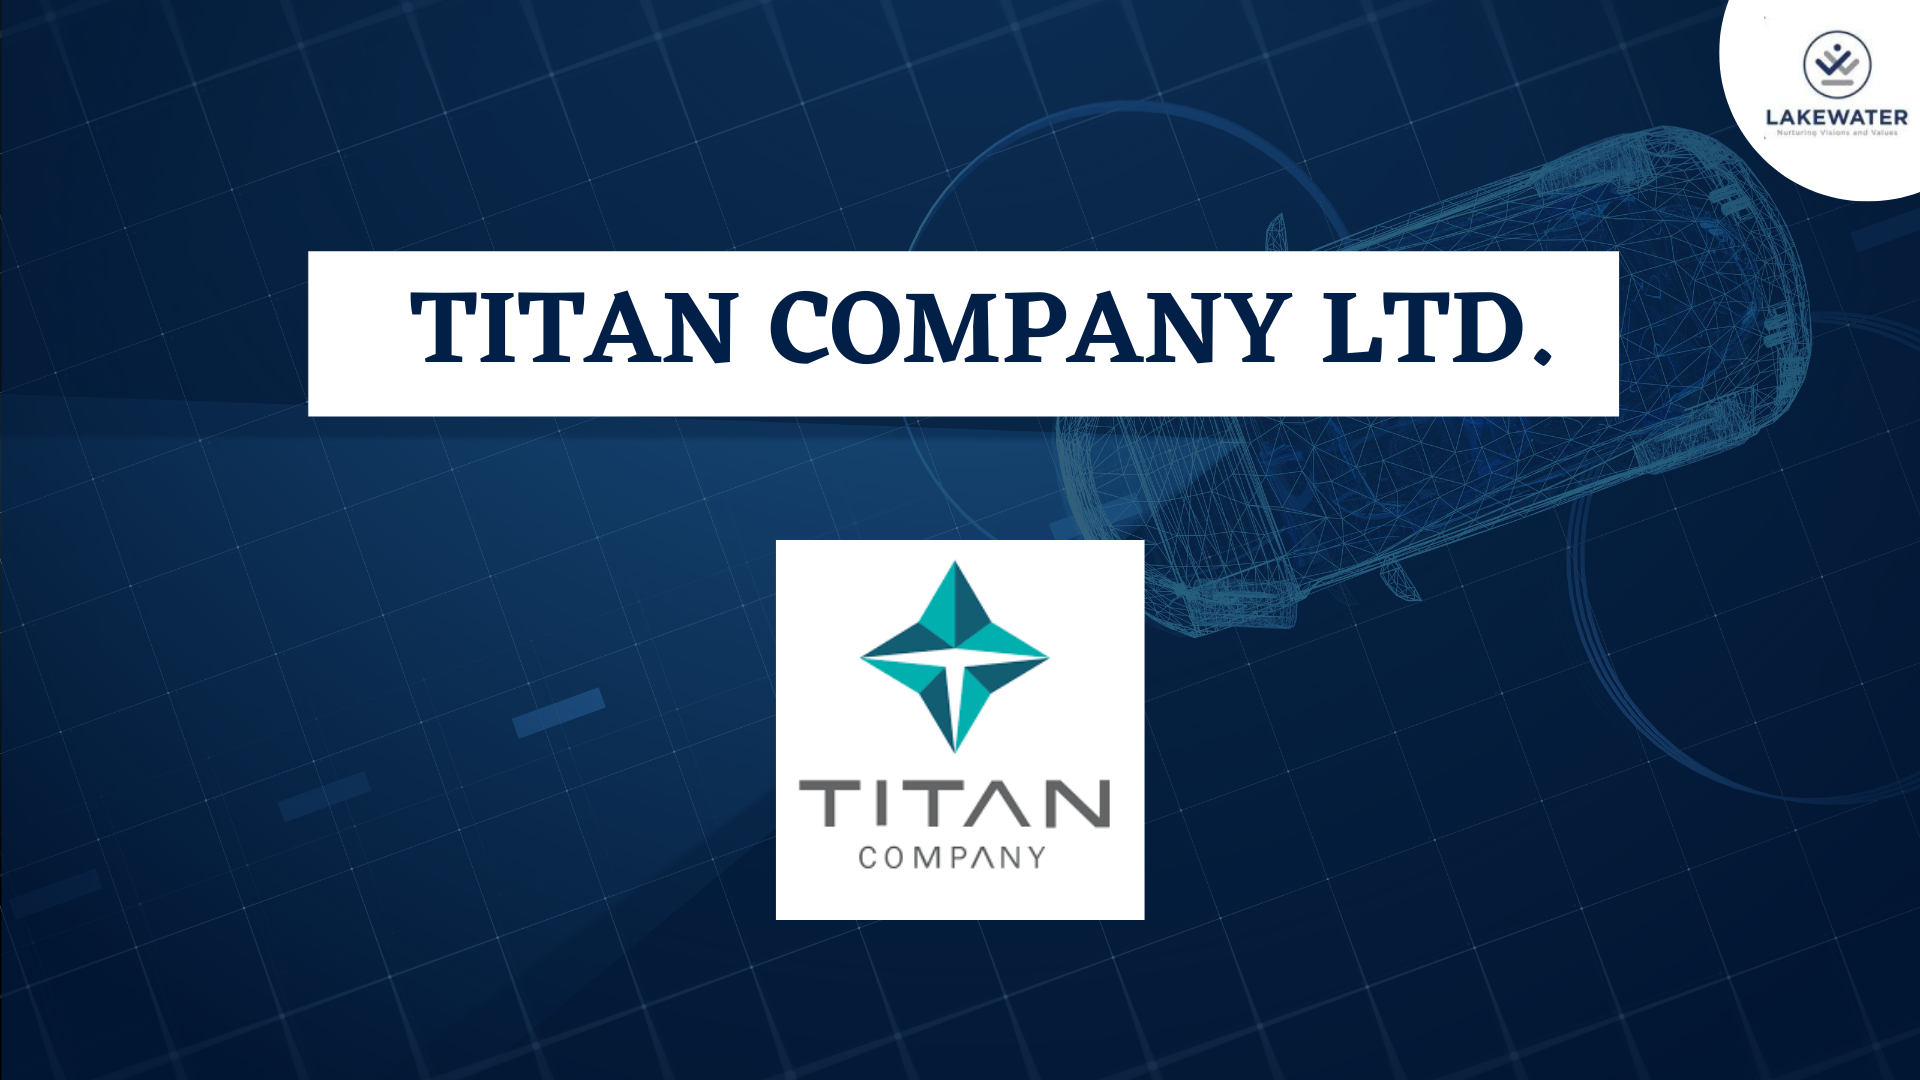 Titan Company LTD.